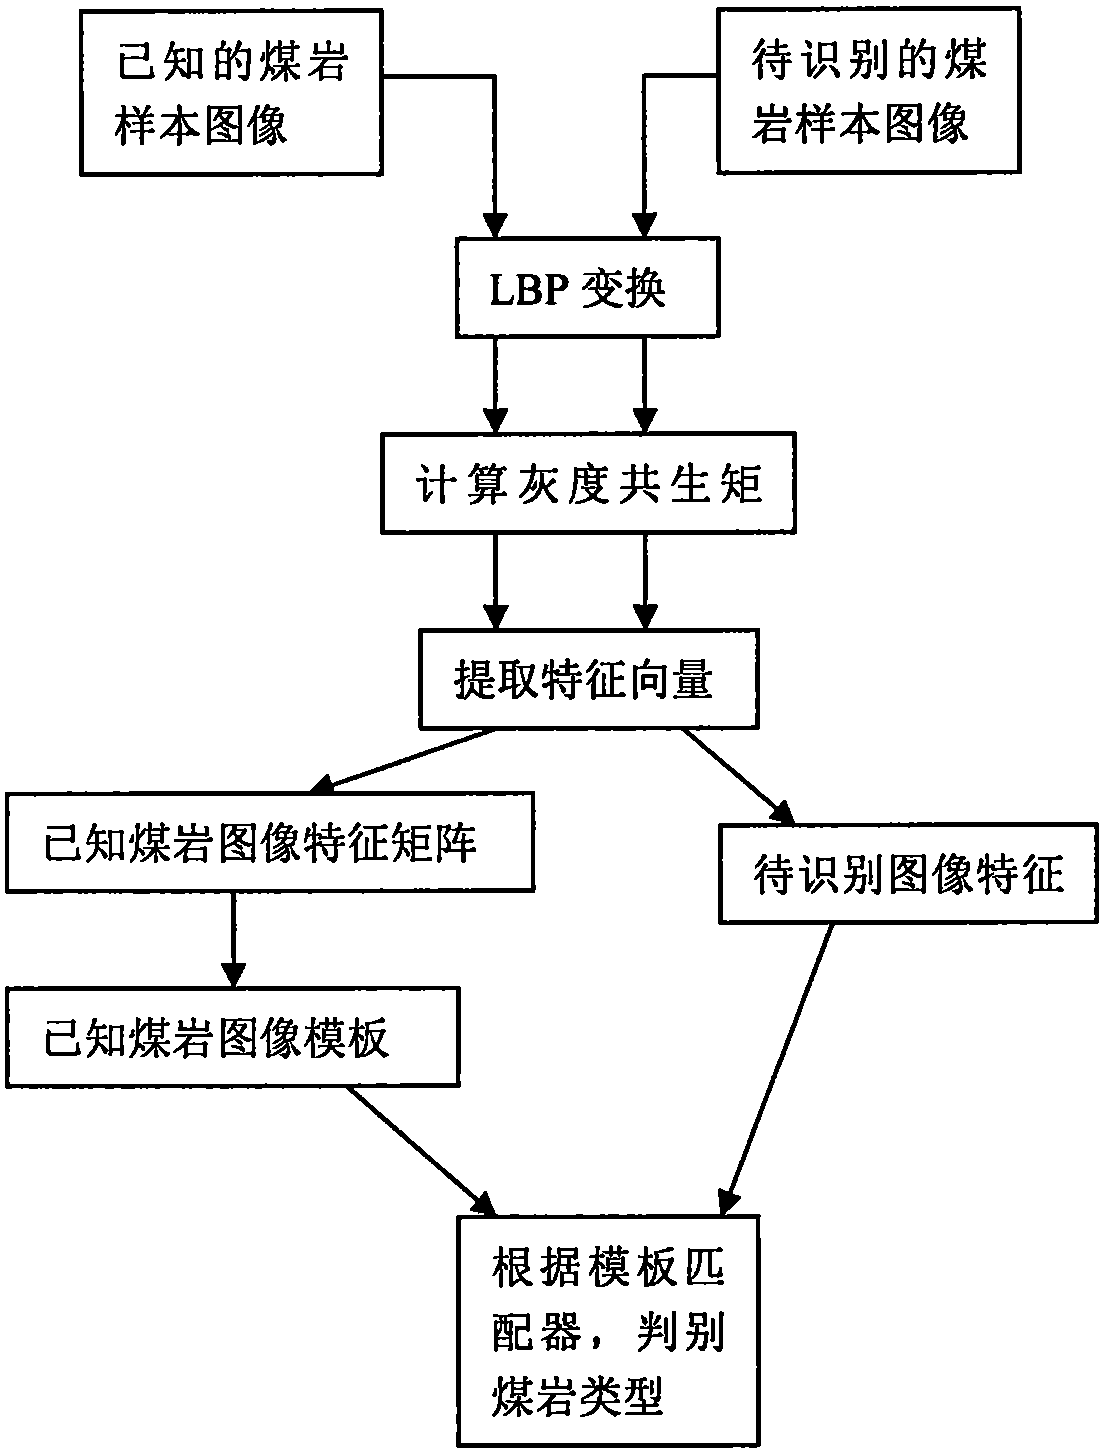 Coal-rock identification method based on image LBP